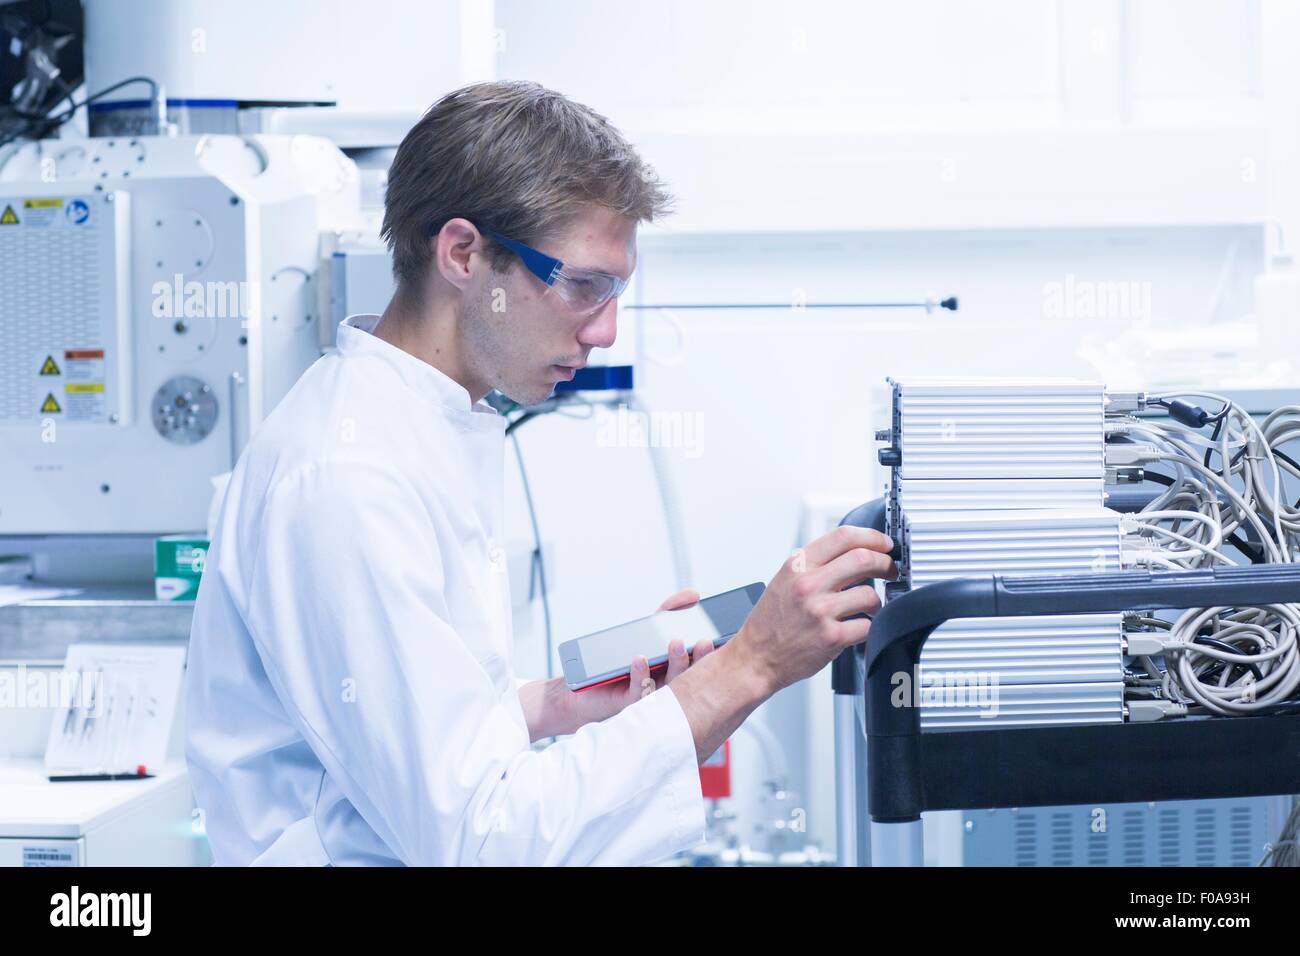 Male scientist adjusting control panel in laboratory Stock Photo